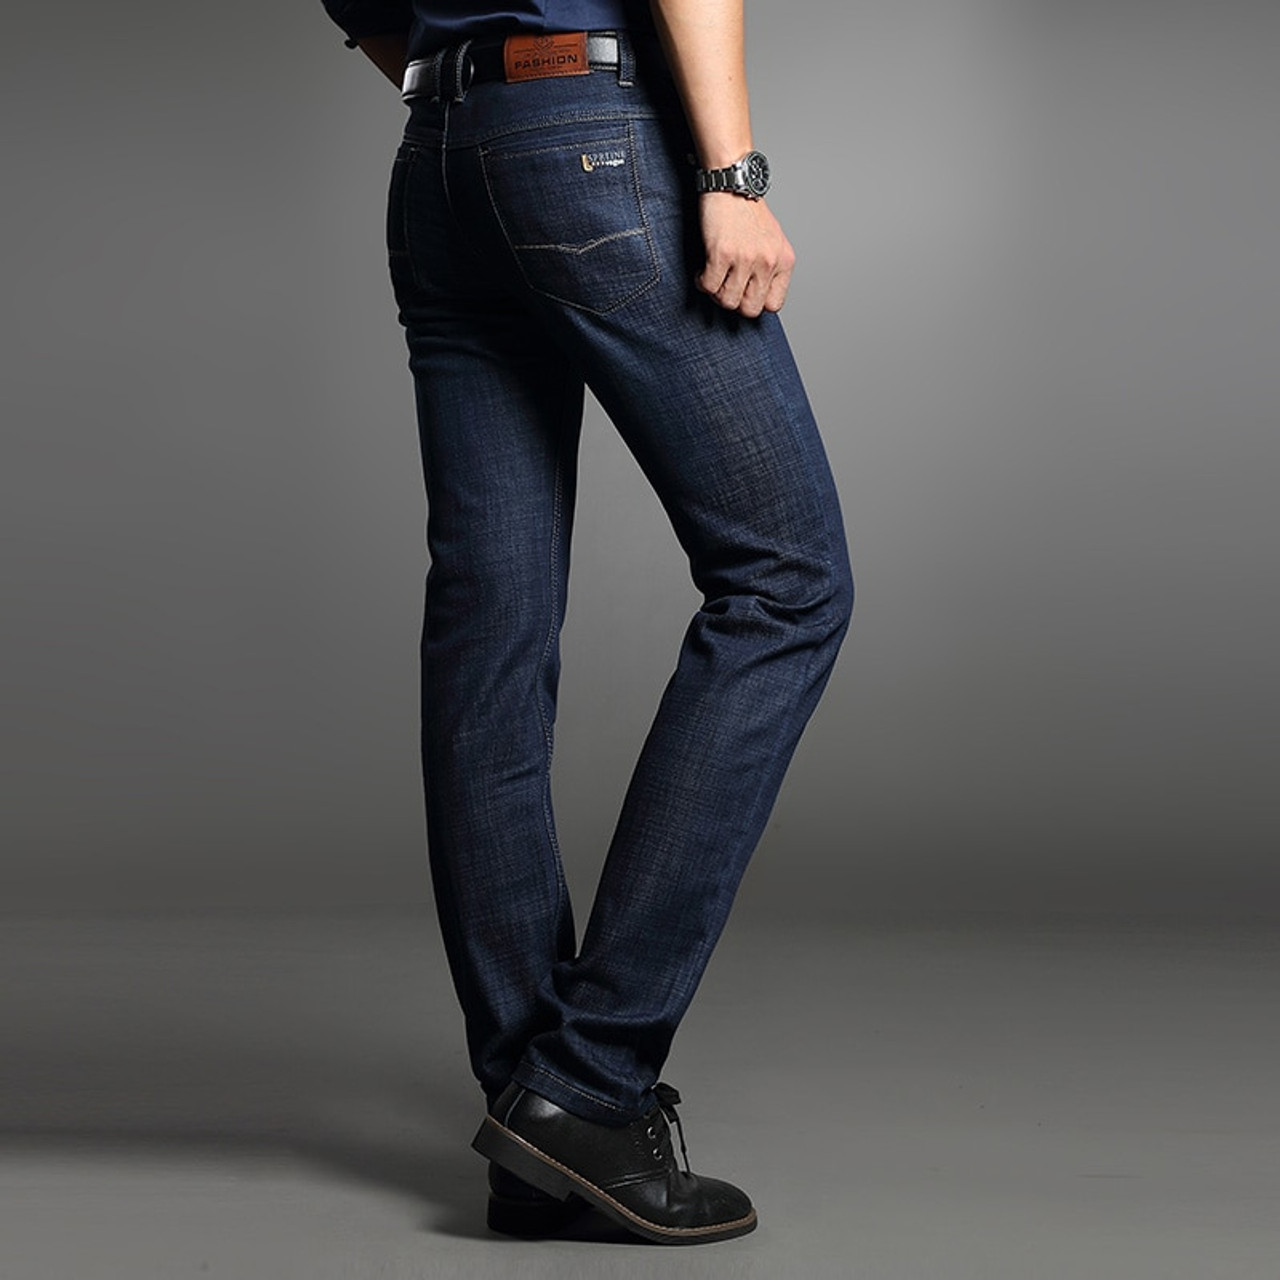 Drizzte Men's Jeans Blue Denim Business Stragiht Silm Fit Jeans Size 30 32 34 35 36 38 Jean for Men - OnshopDeals.Com